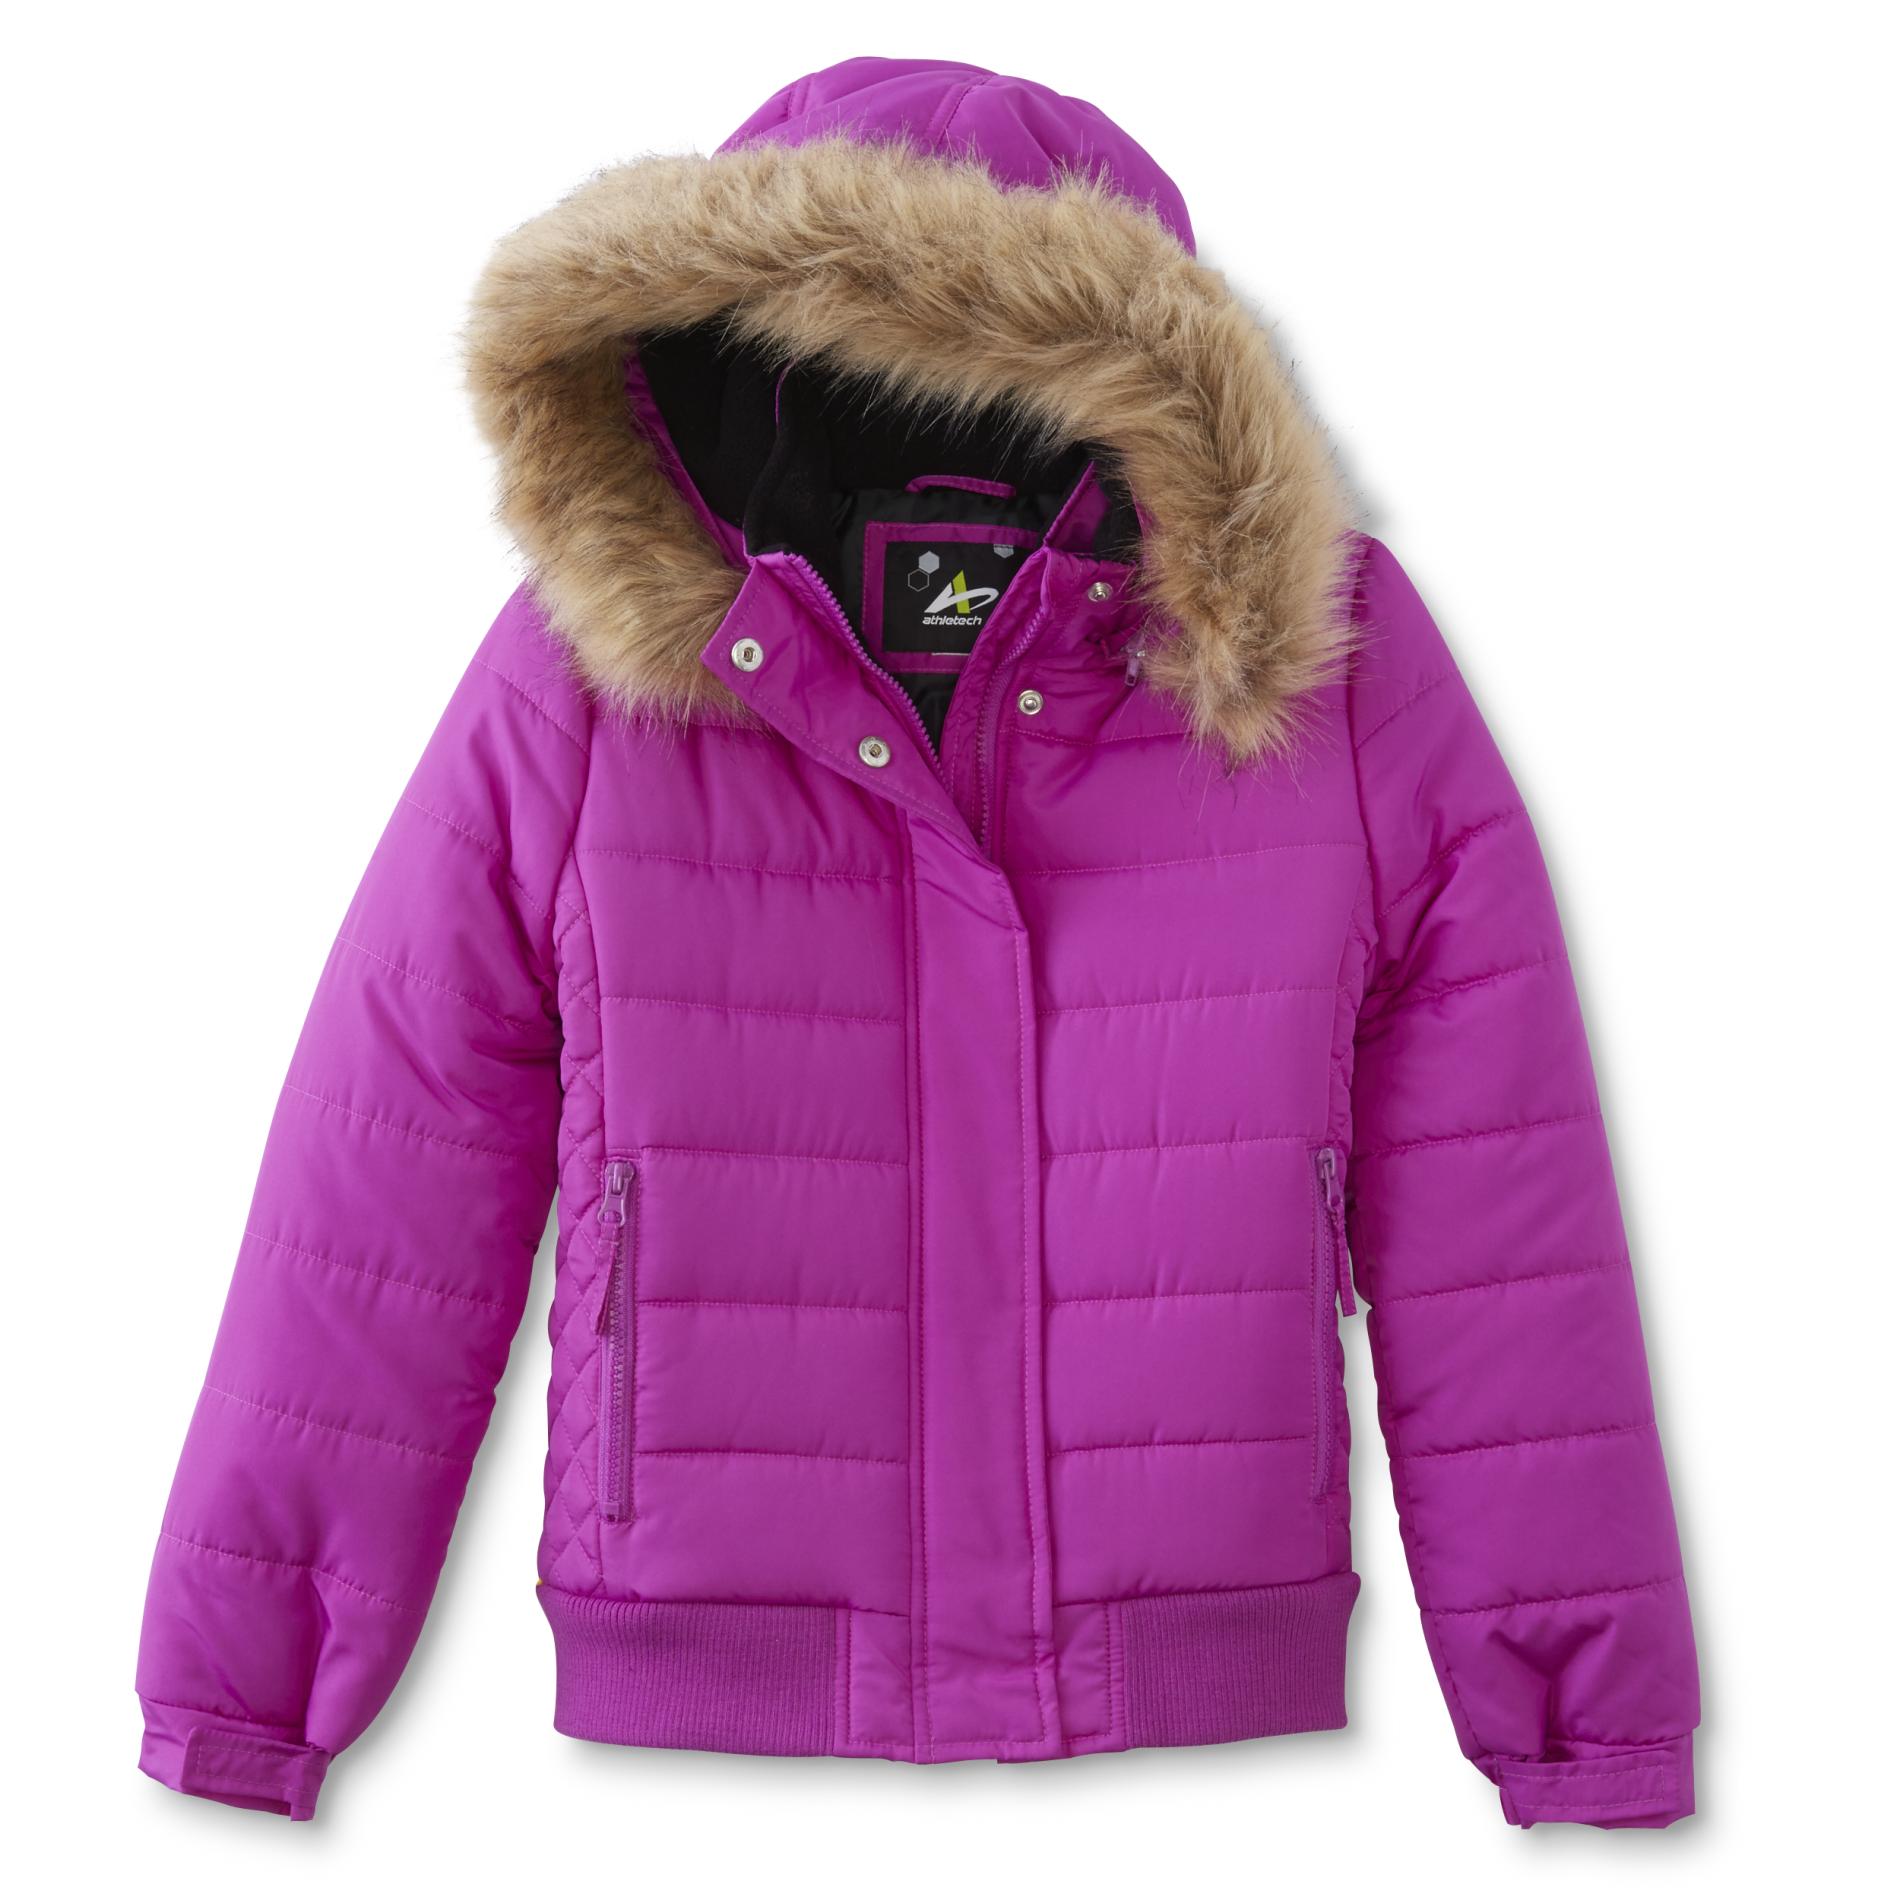 Athletech Girls' Hooded Winter Jacket